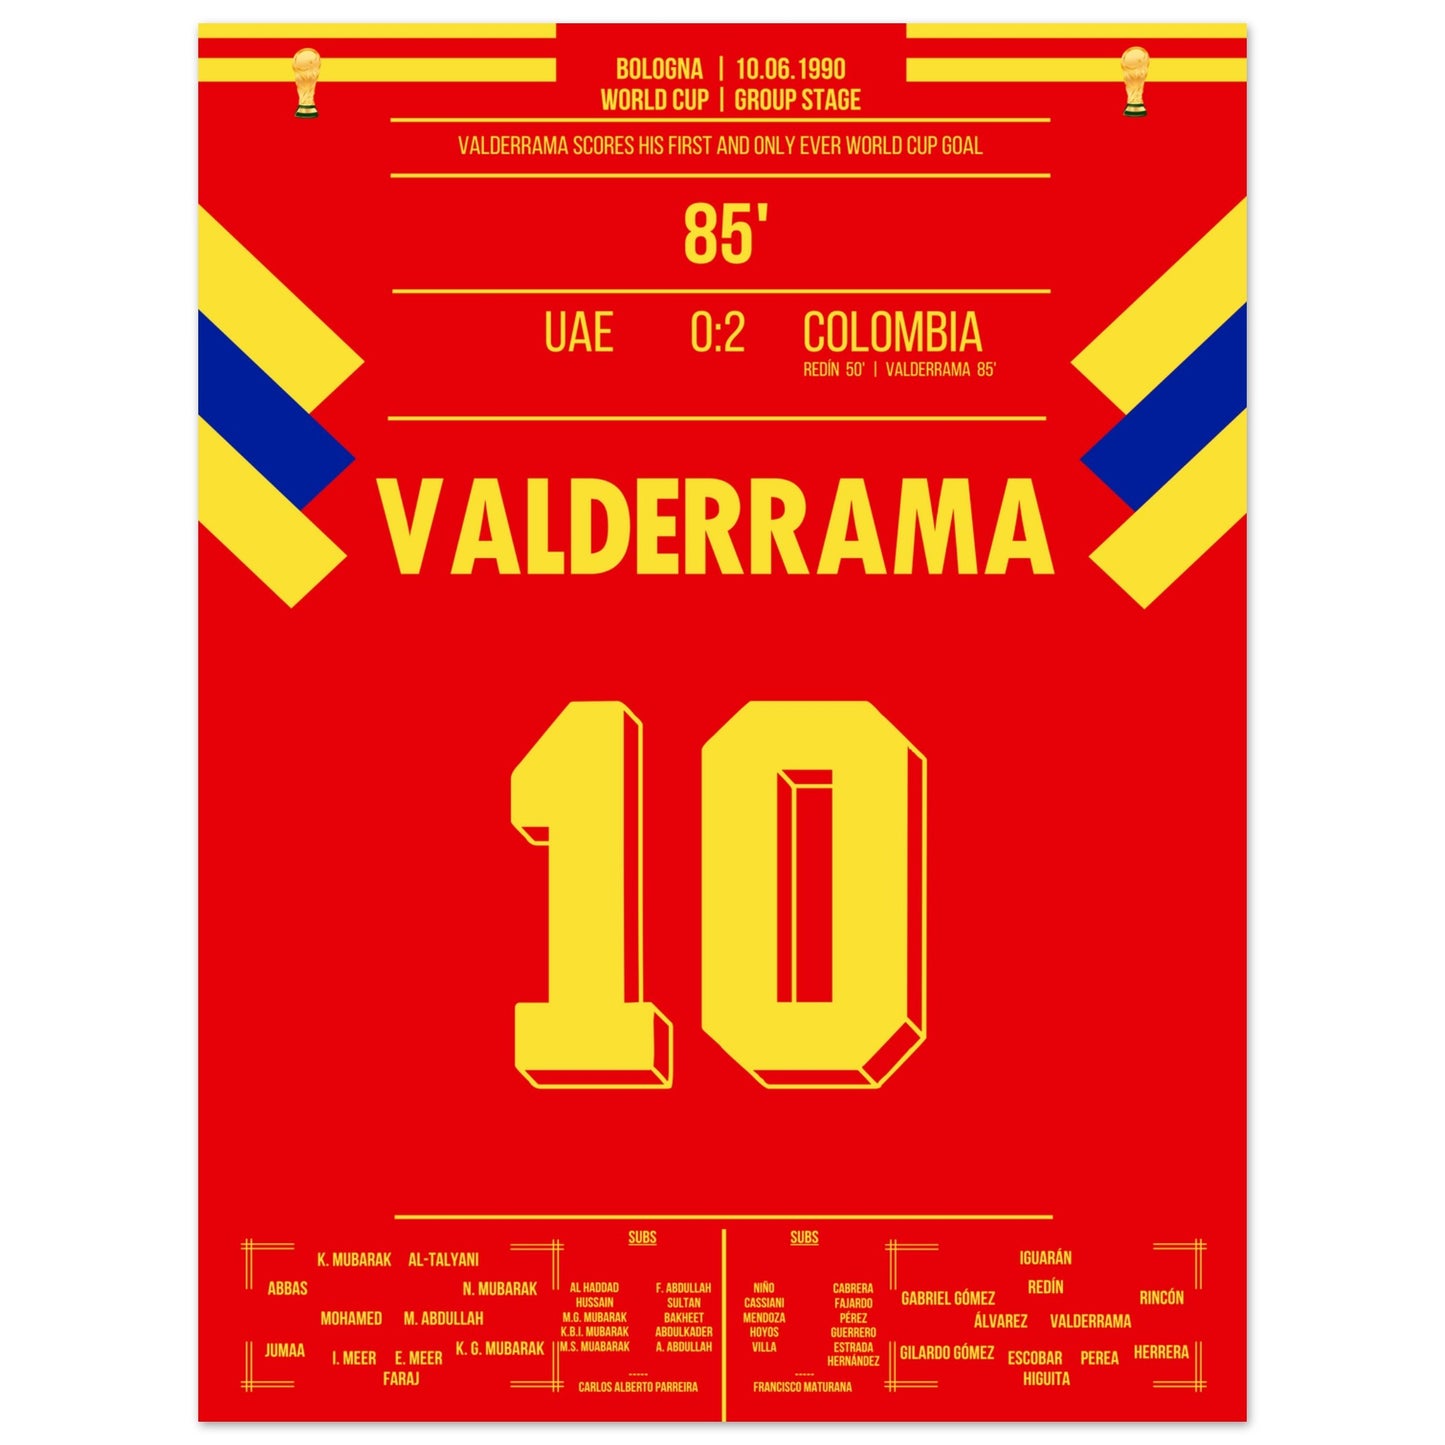 Valderrama's Tor bei der WM 1990 "El Pibe"